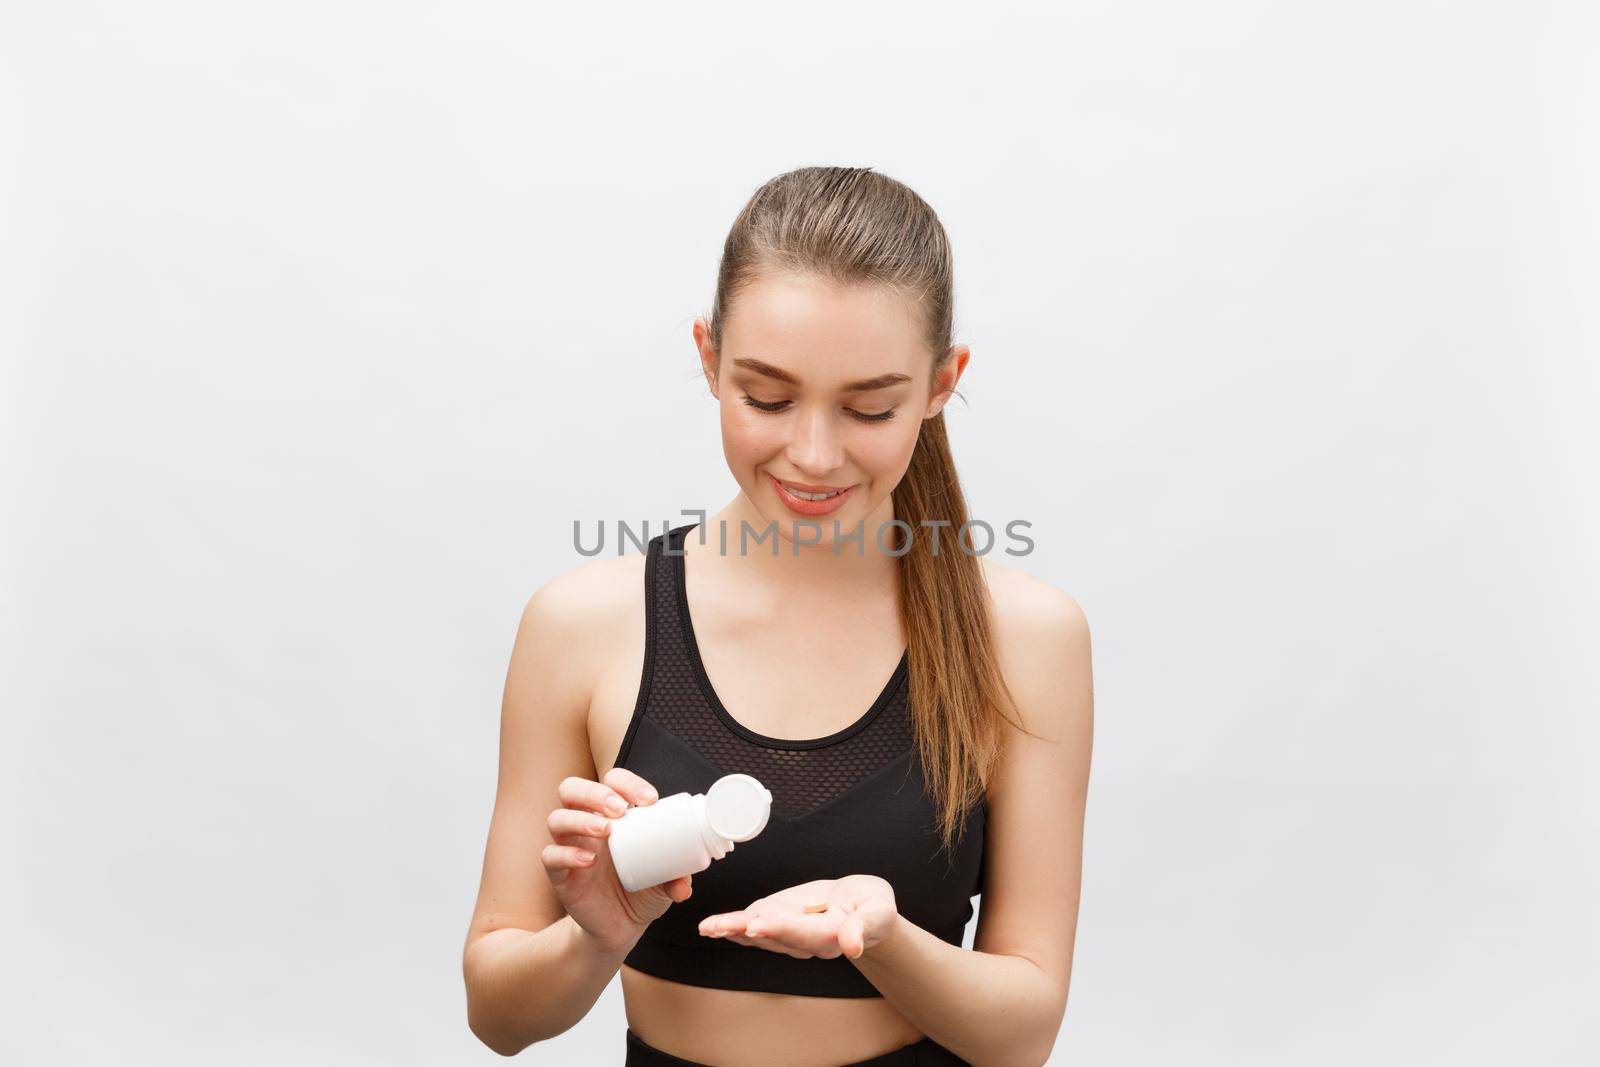 Smiling blonde sport woman holding bottle of medicine on white background.